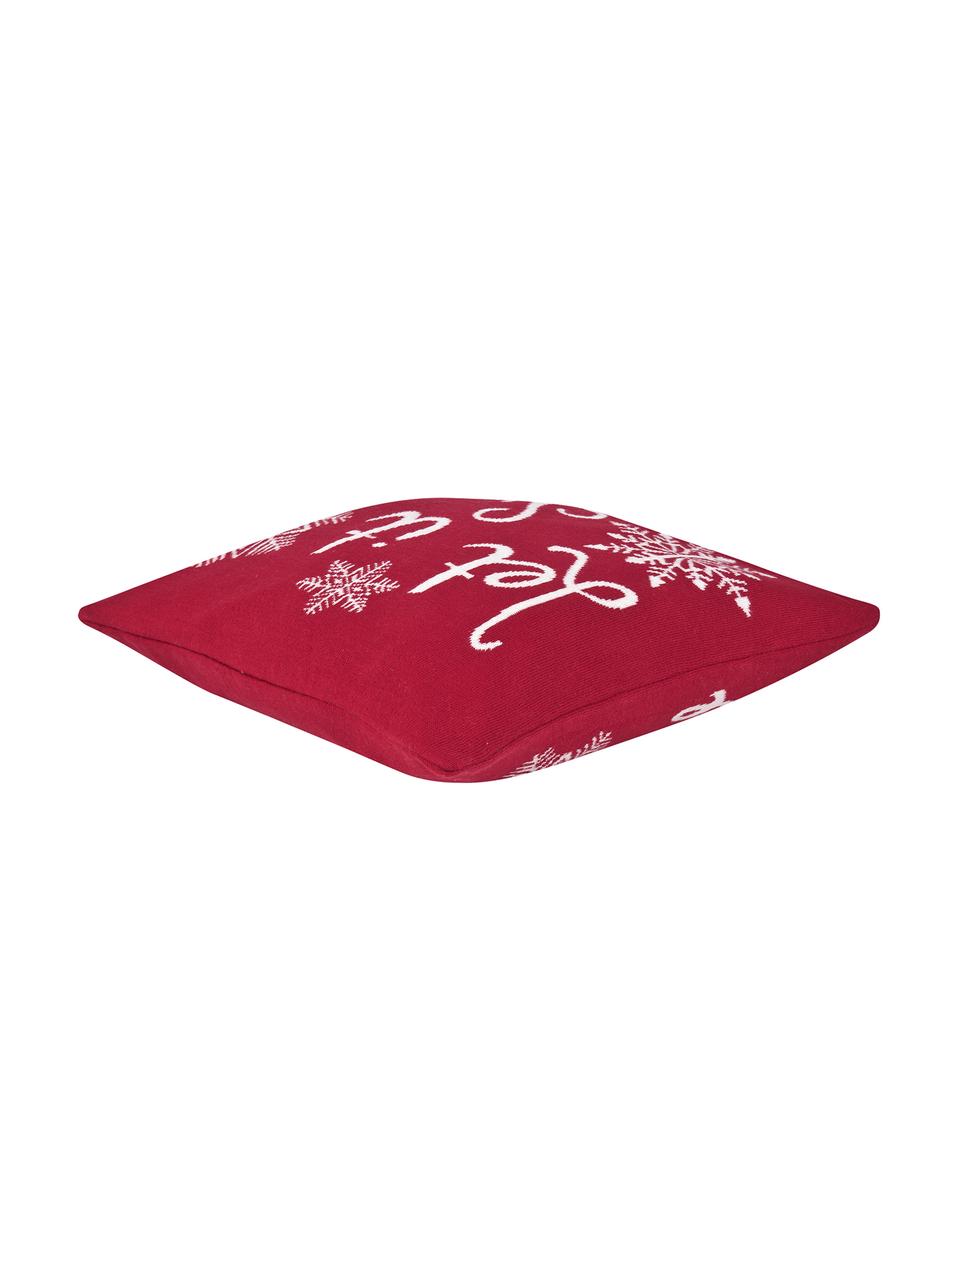 Gebreide kussenhoes Let it Snow in rood/wit met opschrift, Katoen, Rood, crèmewit, B 40 x L 40 cm